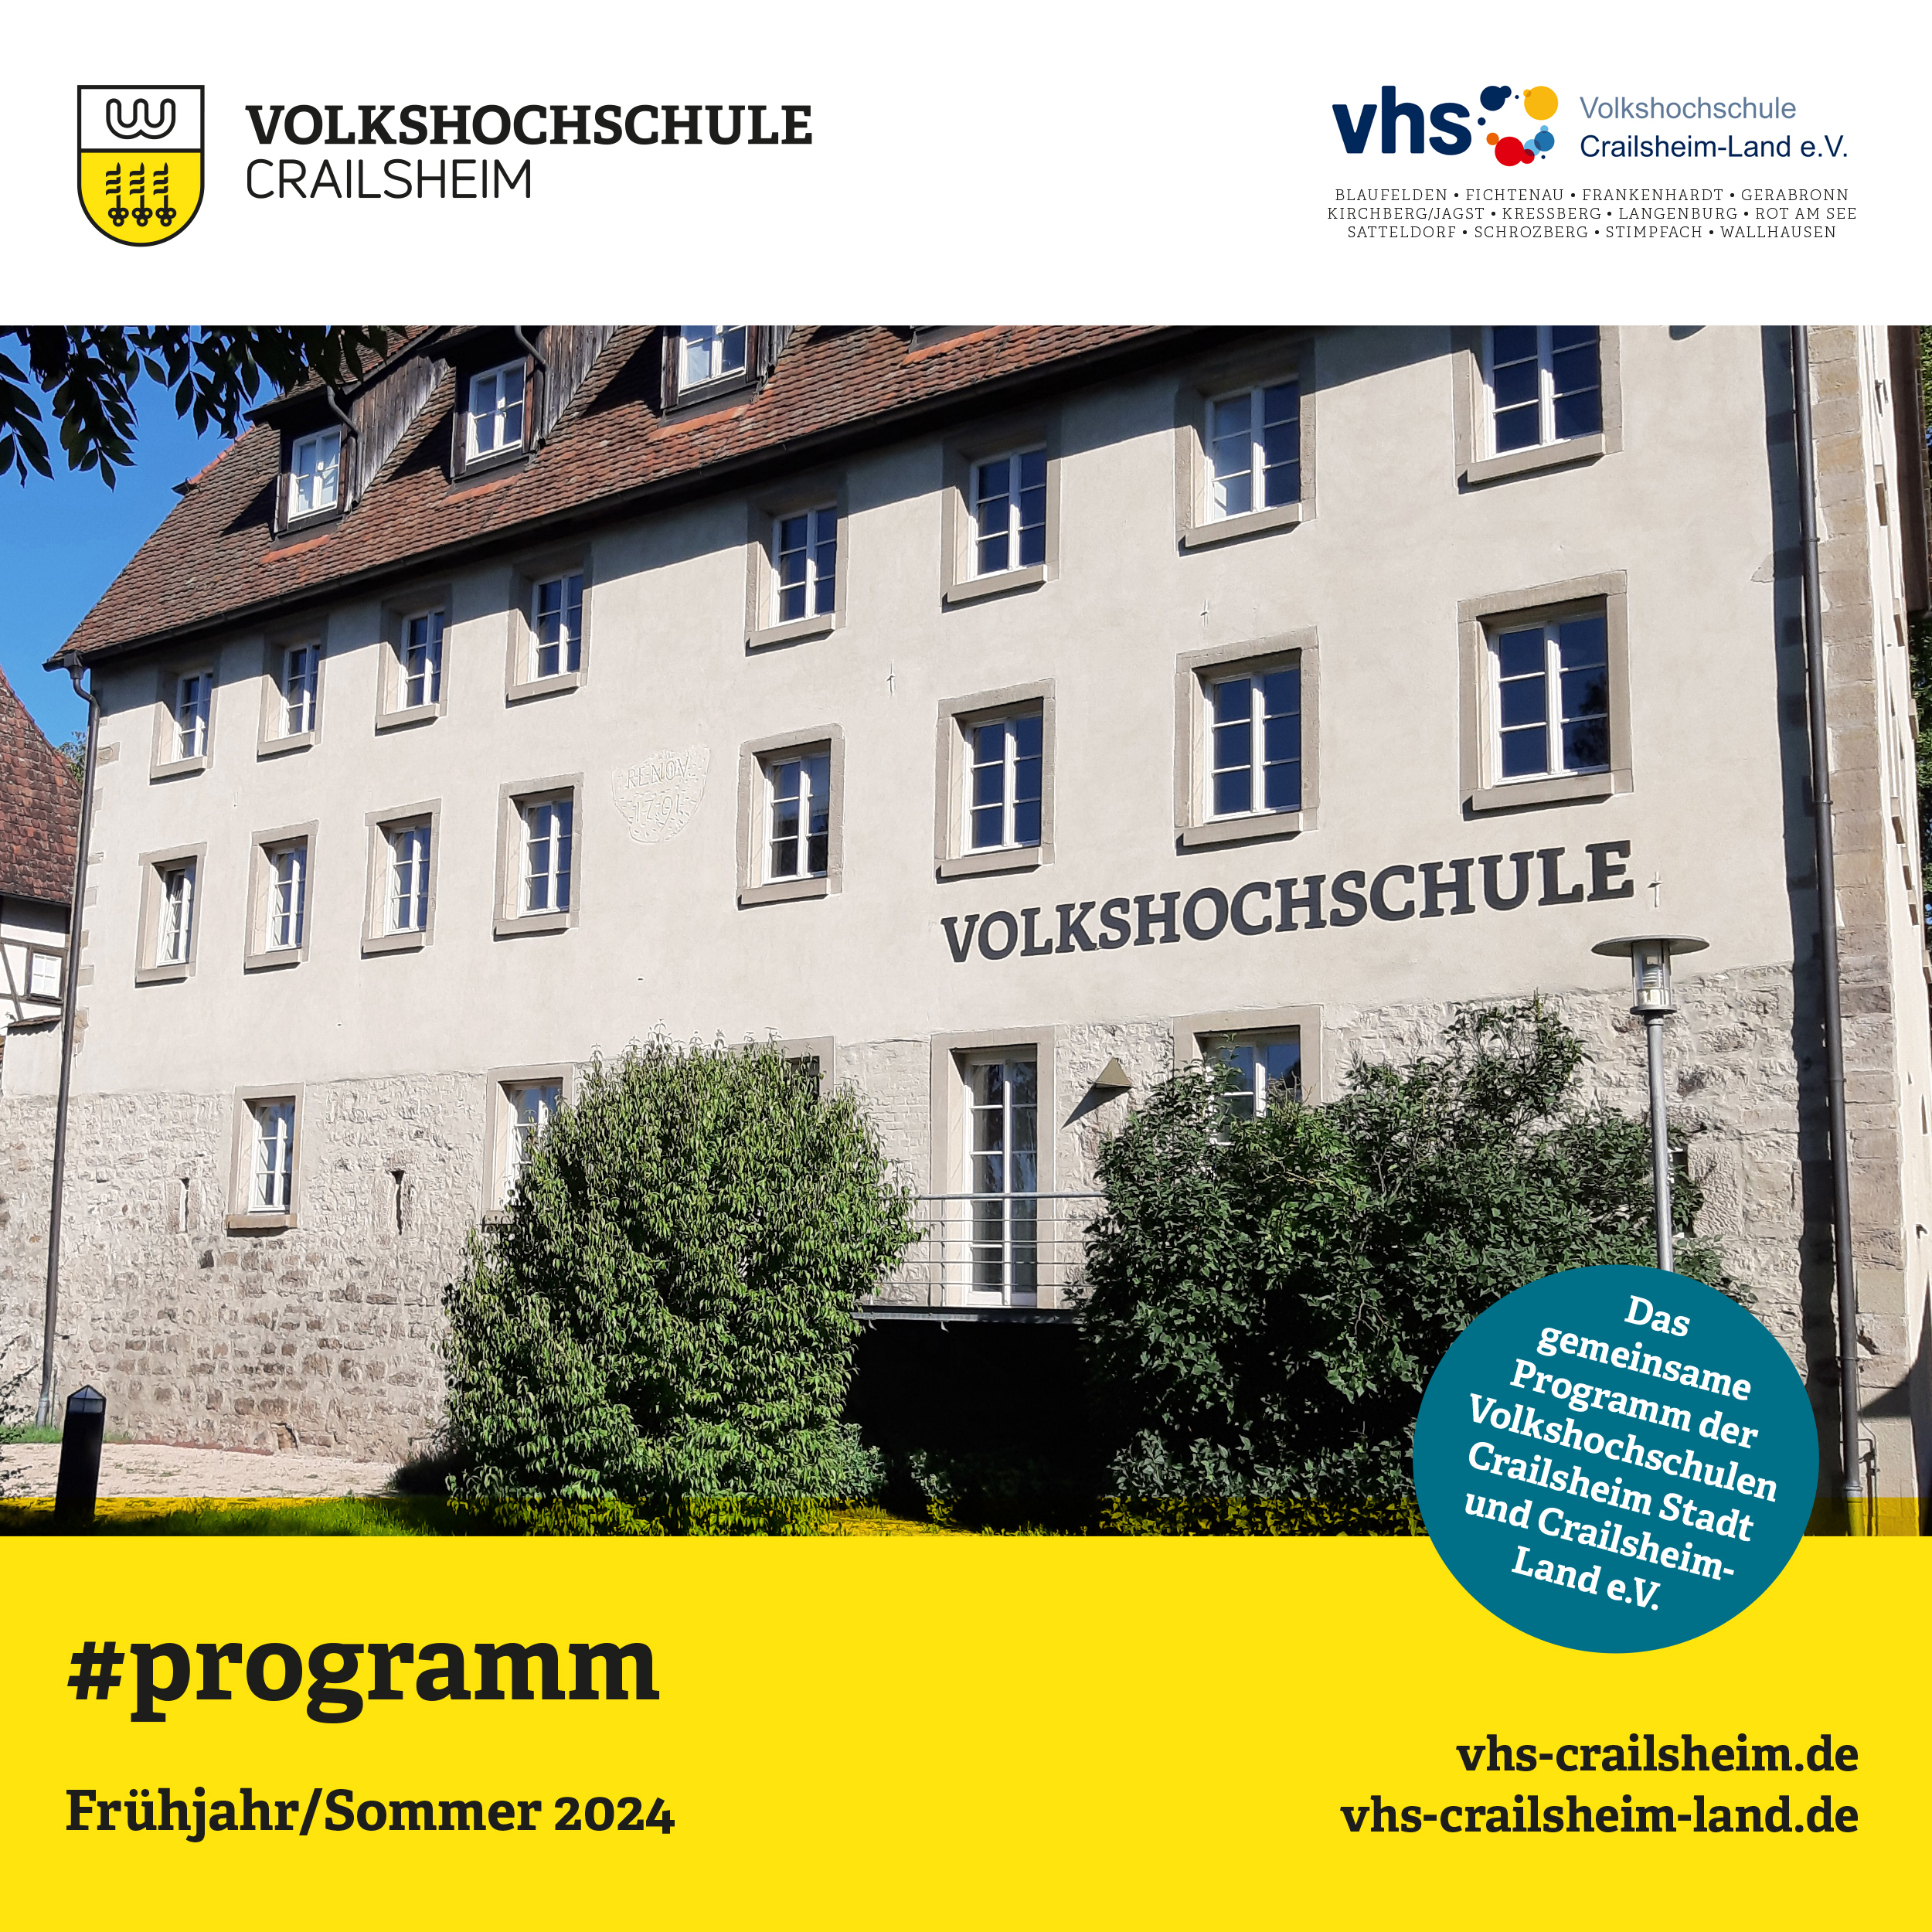 Titelbild Programm Frühling/Sommer 2024 vhs Crailsheim (Rückansicht des vhs--Gebäudes)